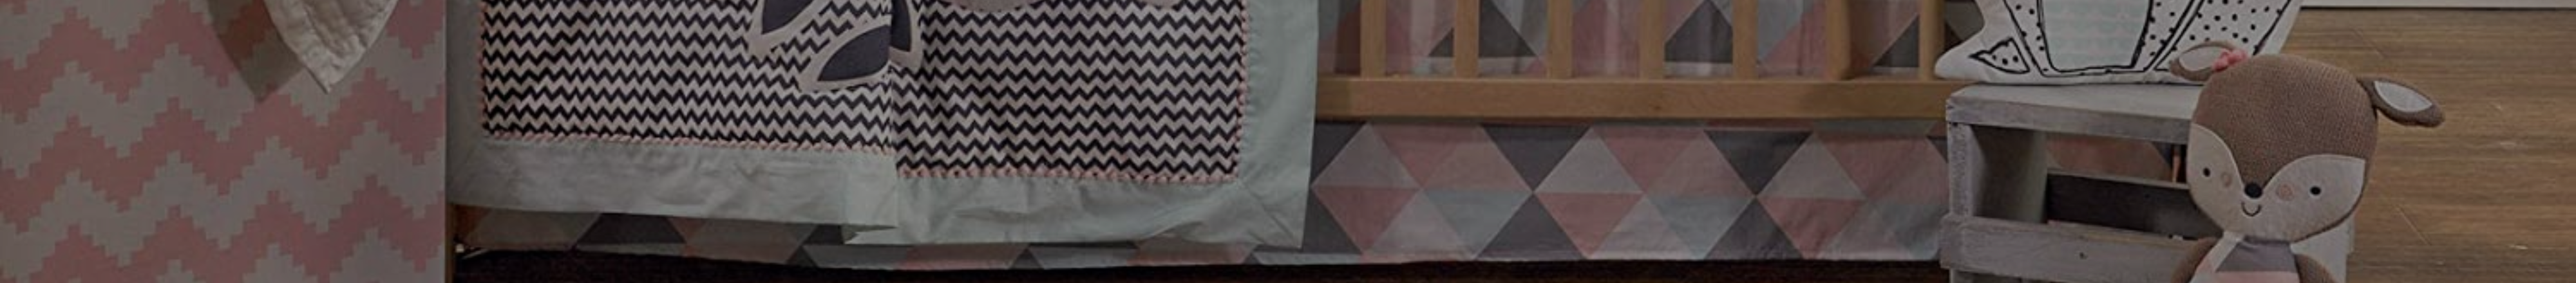 Nursery crib with Lolli Living bed skirt